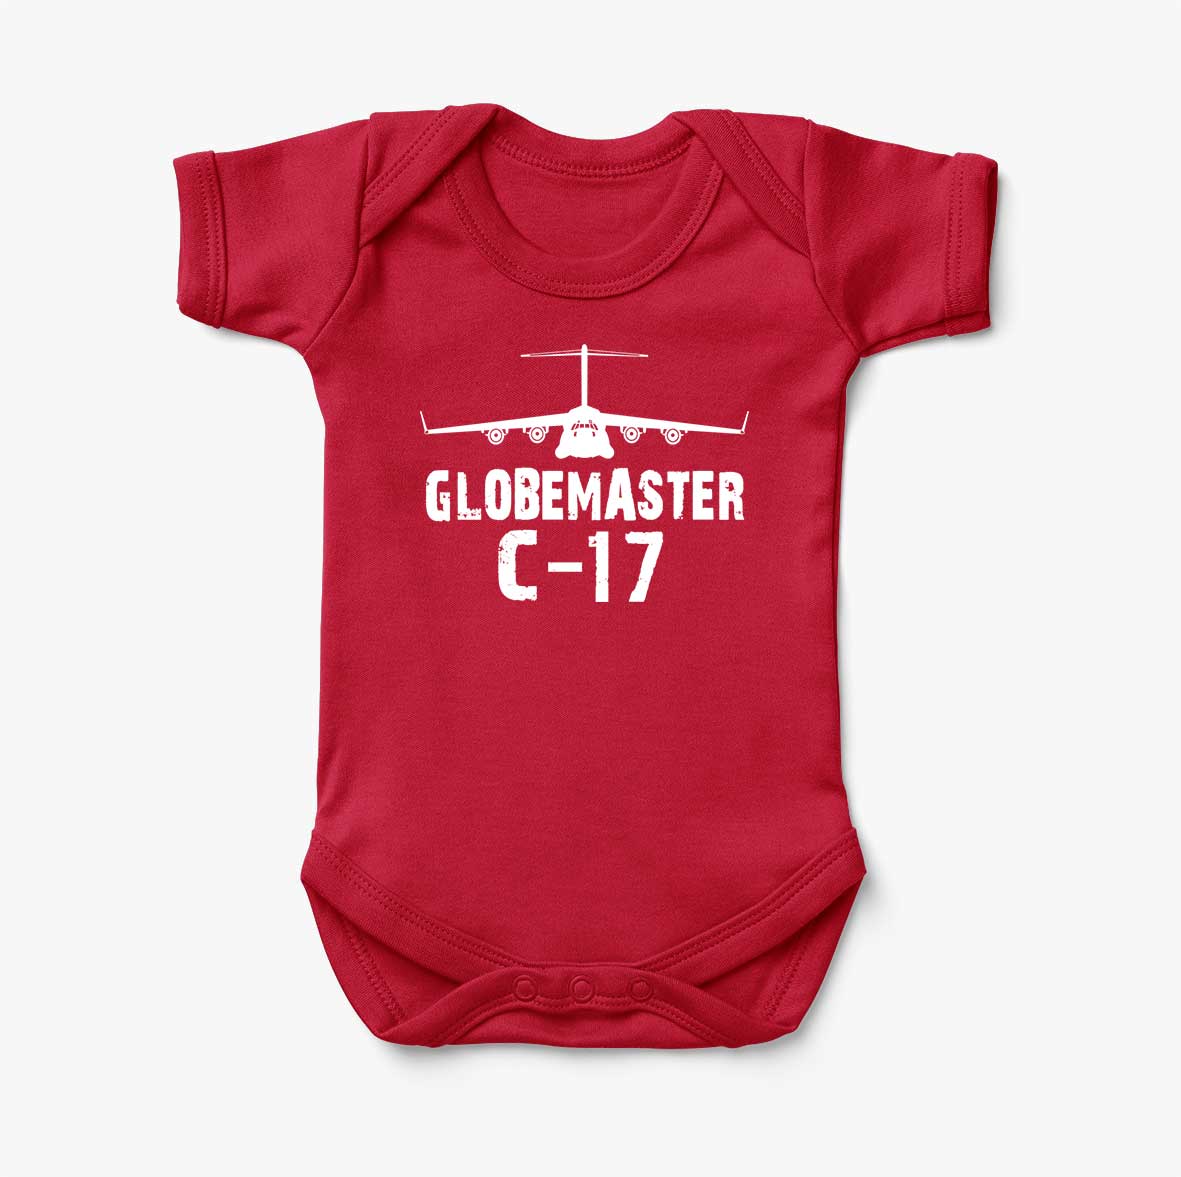 GlobeMaster C-17 & Plane Designed Baby Bodysuits